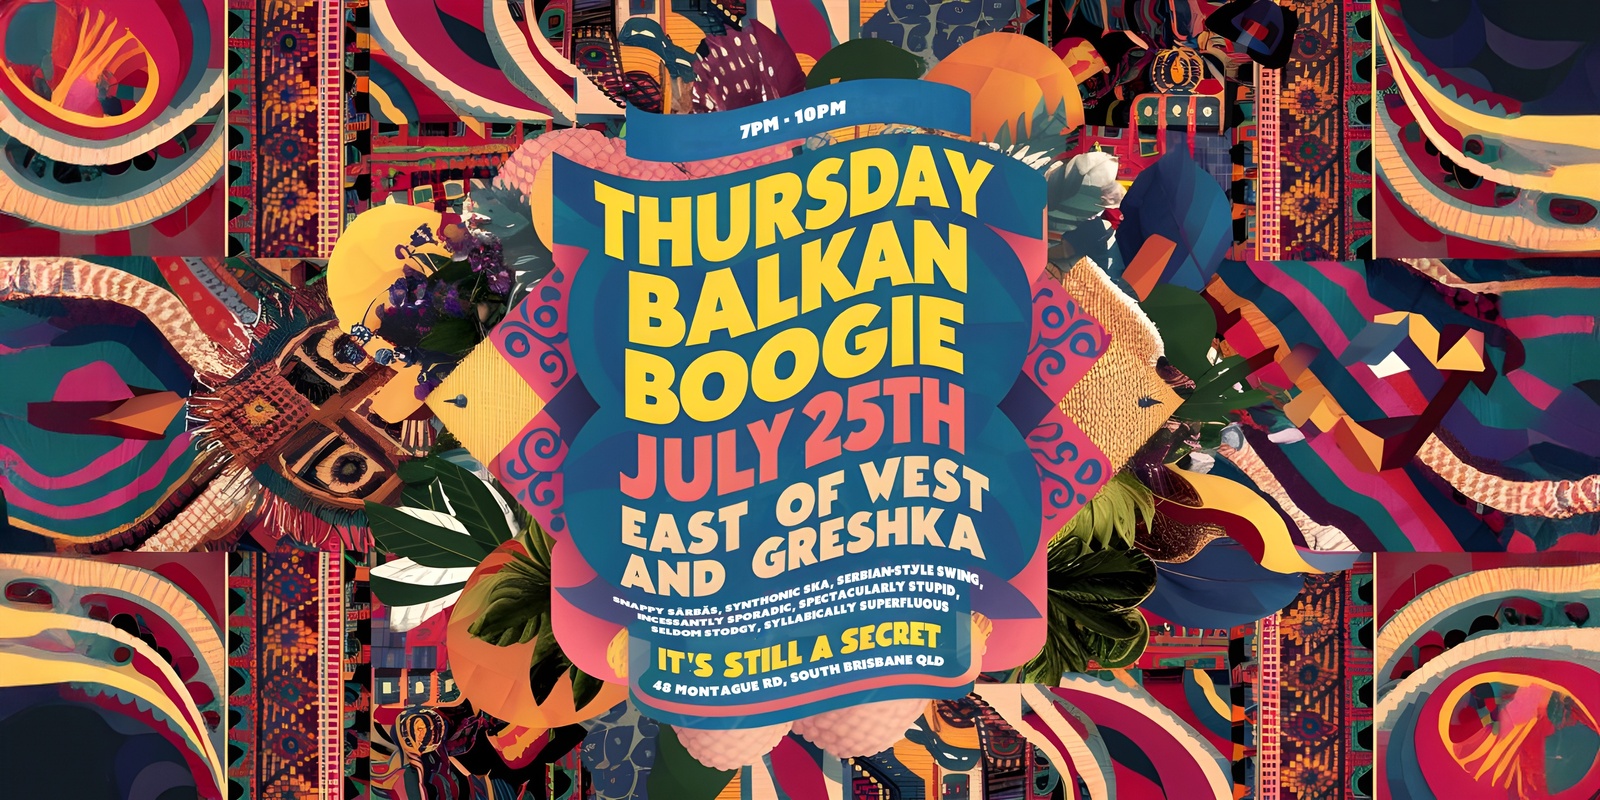 Banner image for Thursday Balkan Boogie with East of West & Greshka